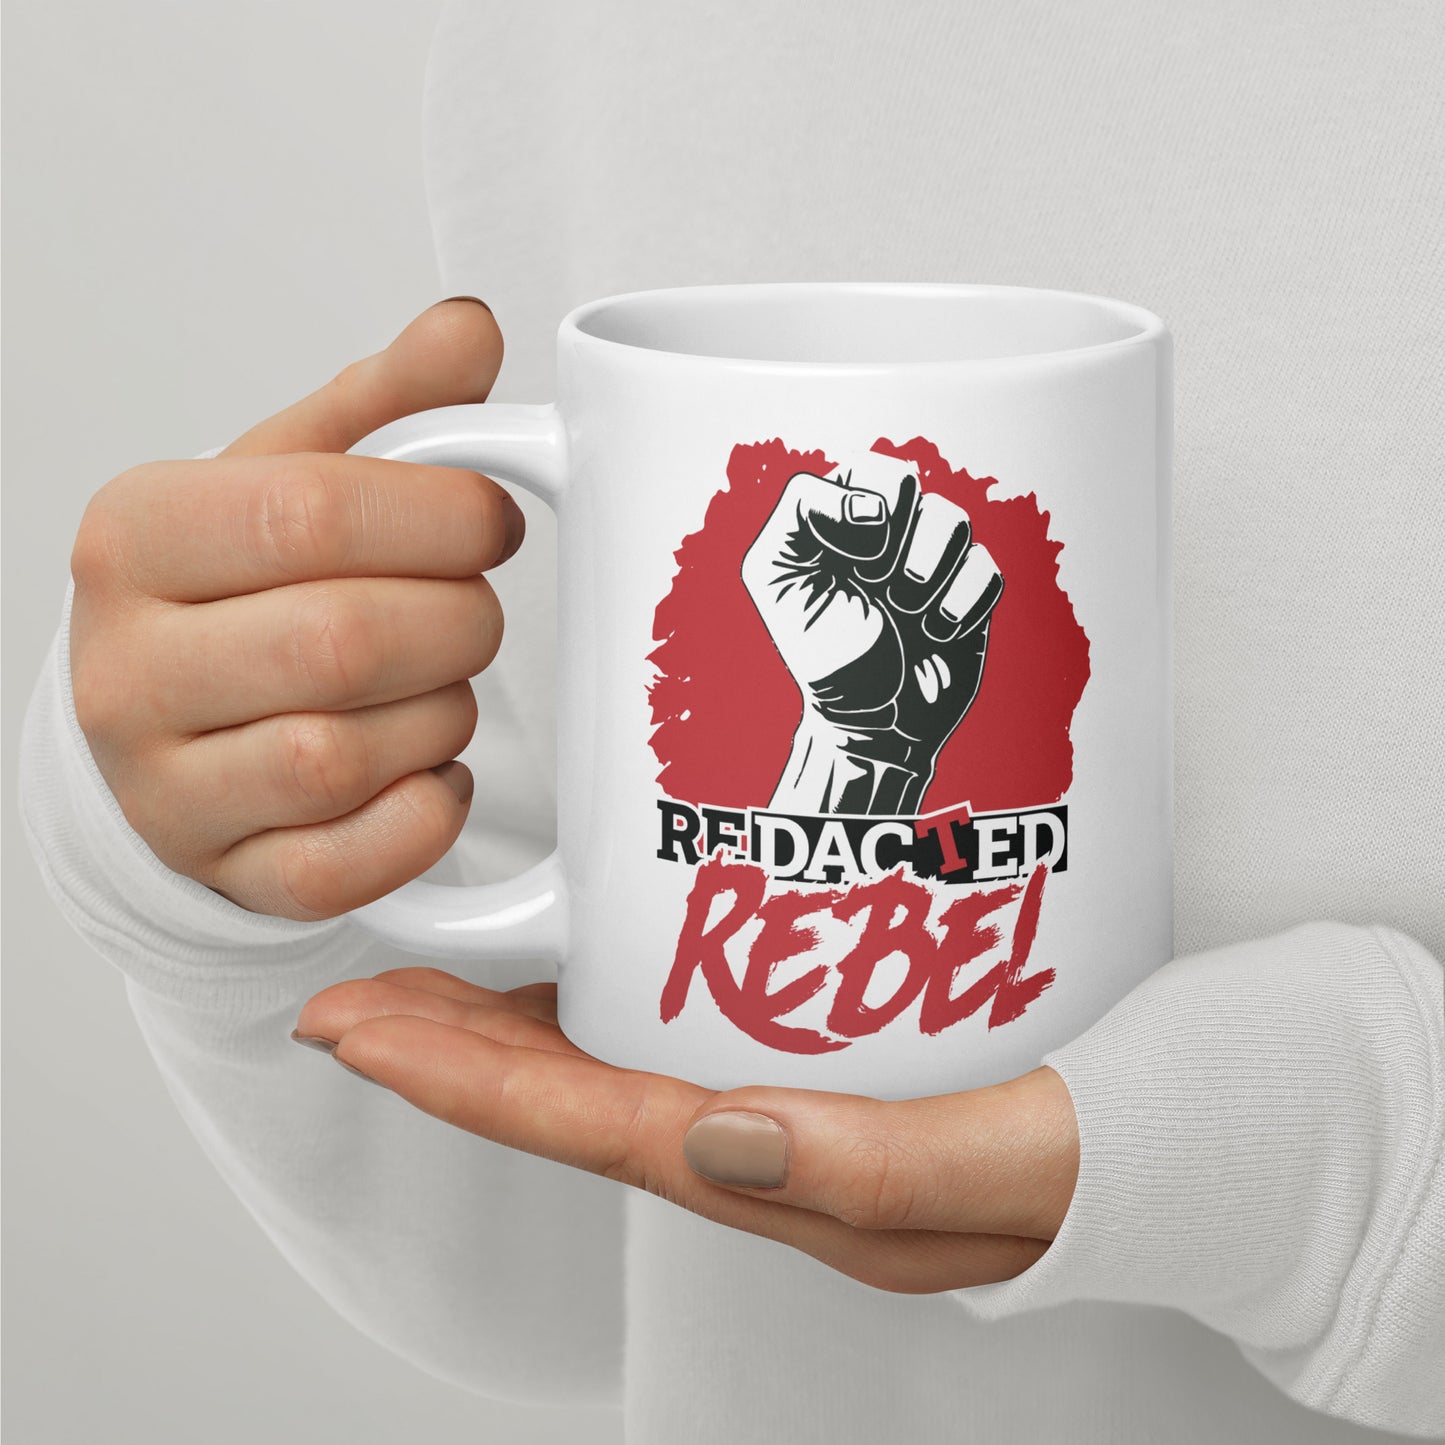 REDACTED REBEL White glossy mug